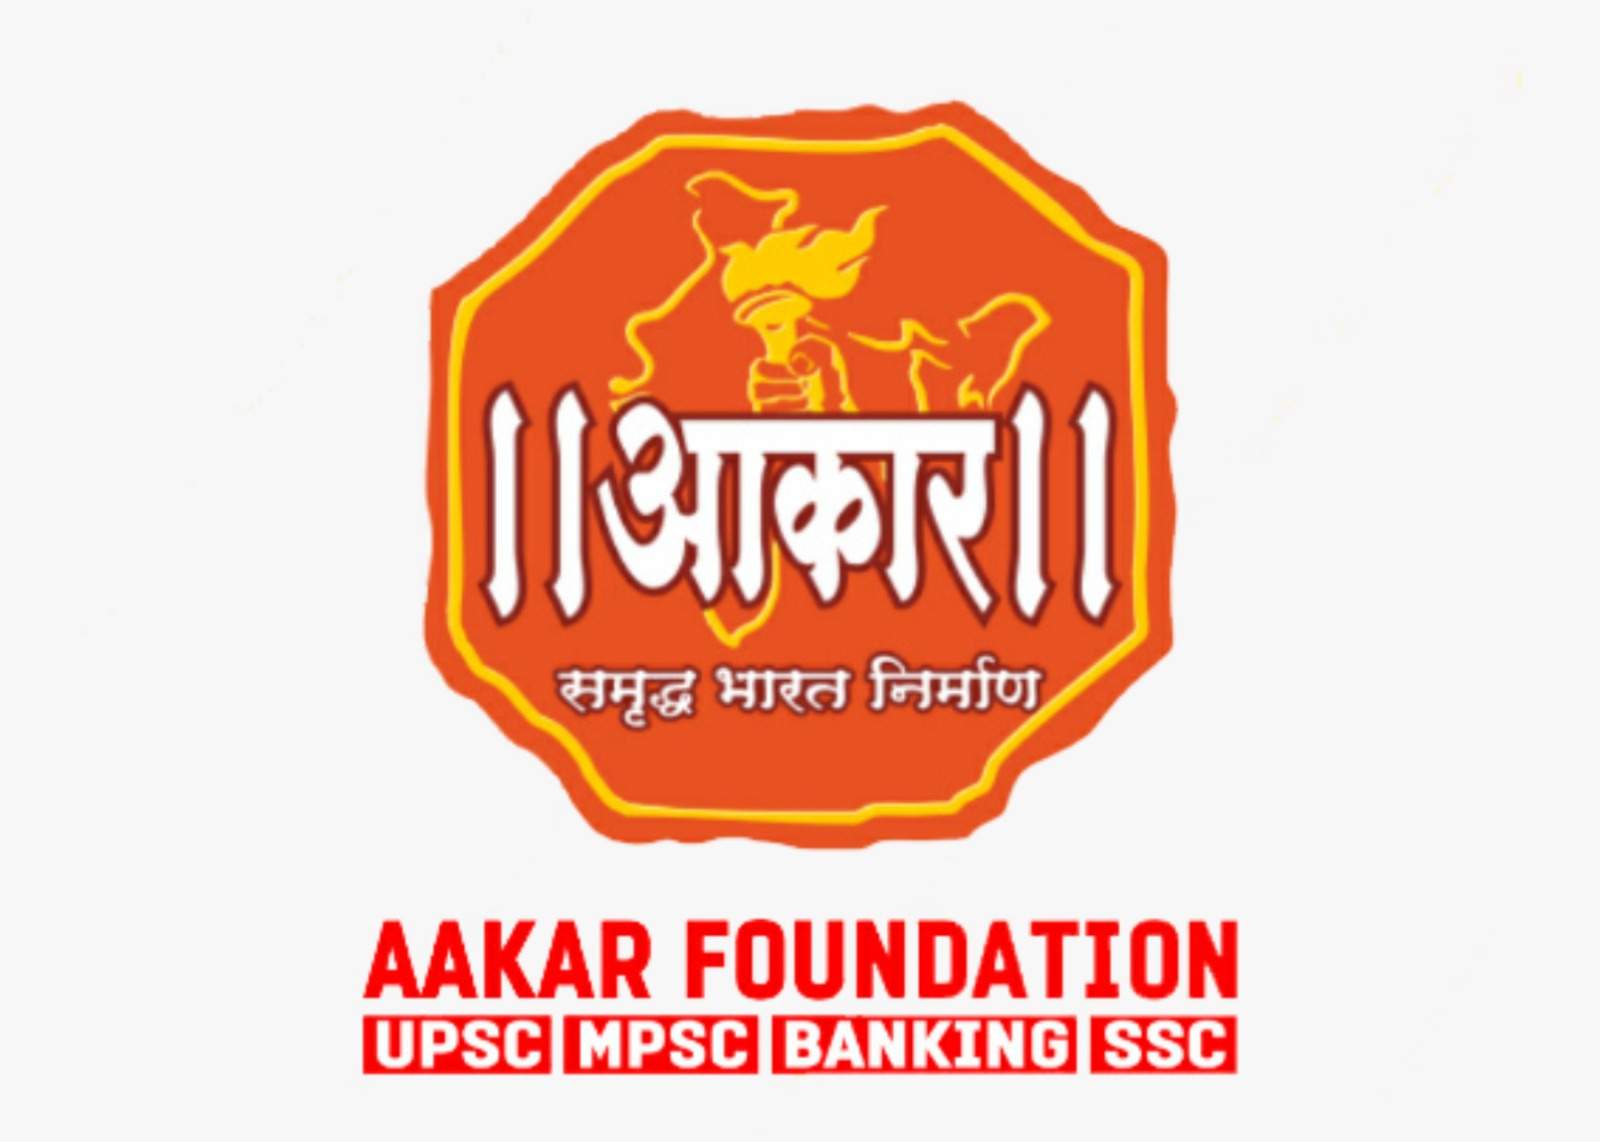 Akakar-Foundation-ClintS-Logos-Codestrela